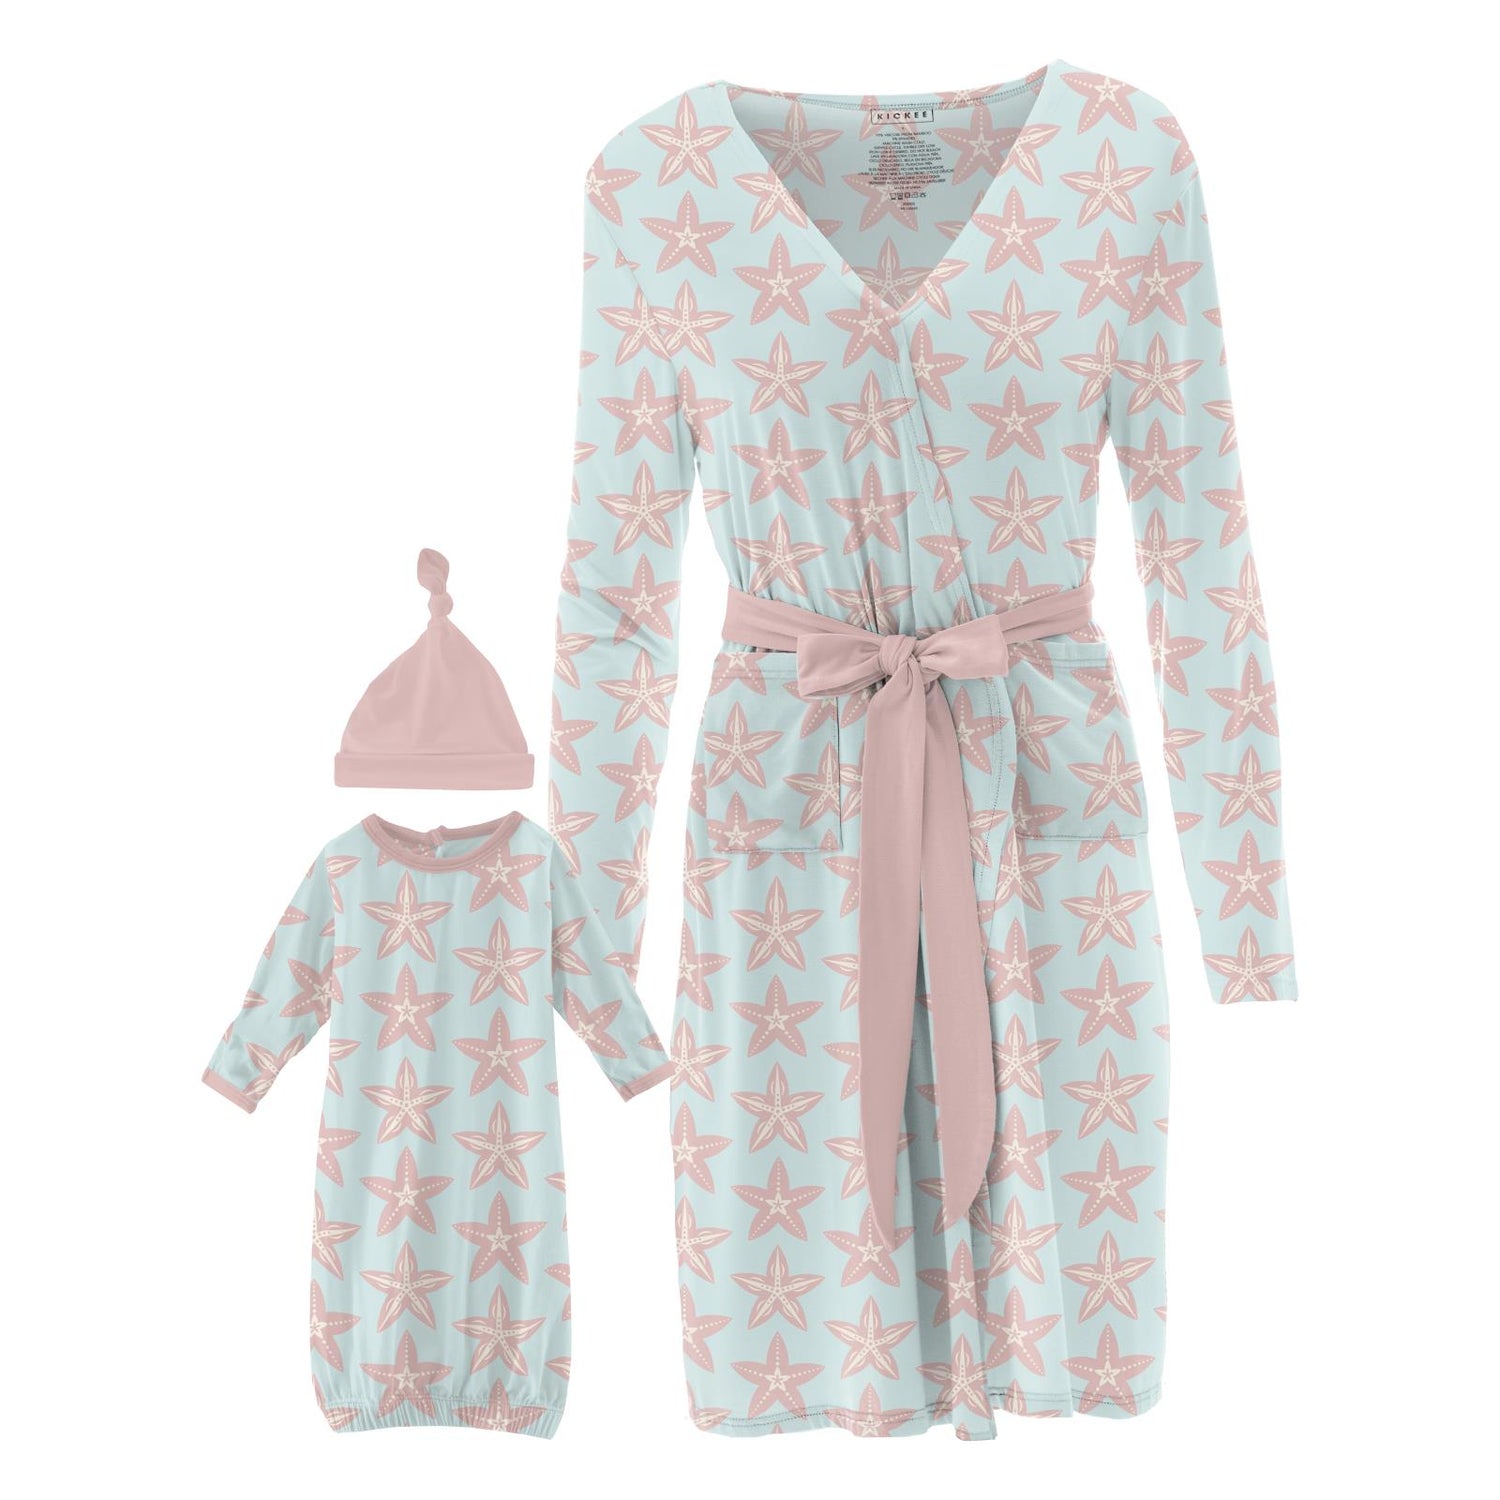 Women's Maternity/Nursing Robe & Layette Gown Set in Fresh Air Fancy Starfish